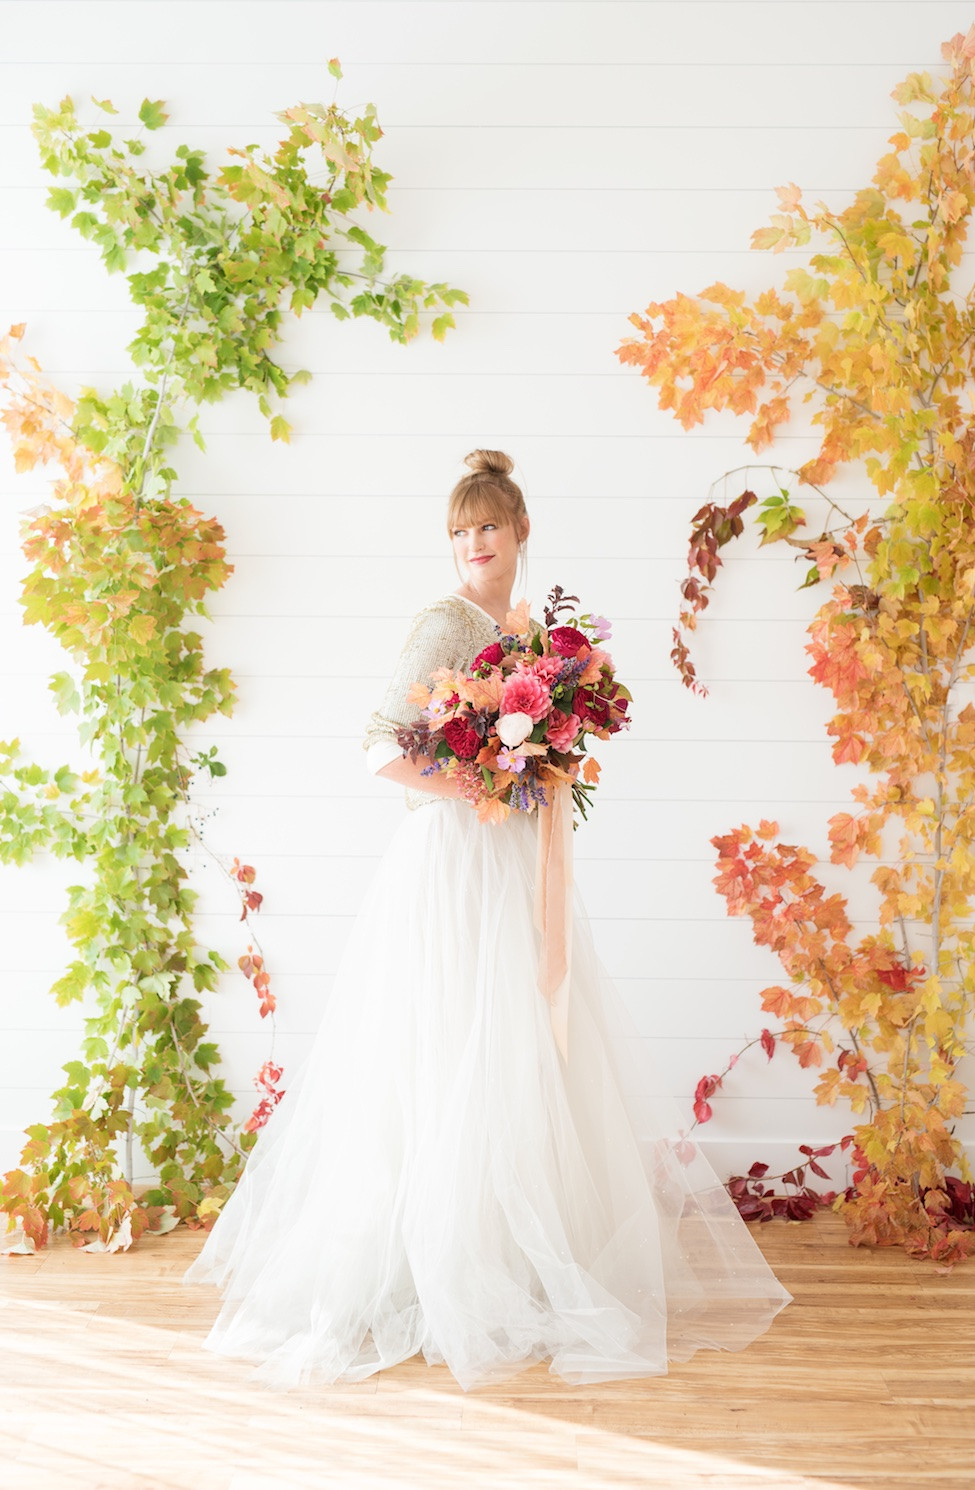 DIY Wedding Ceremony Backdrop
 Stunning Fall Wedding Backdrops DIY